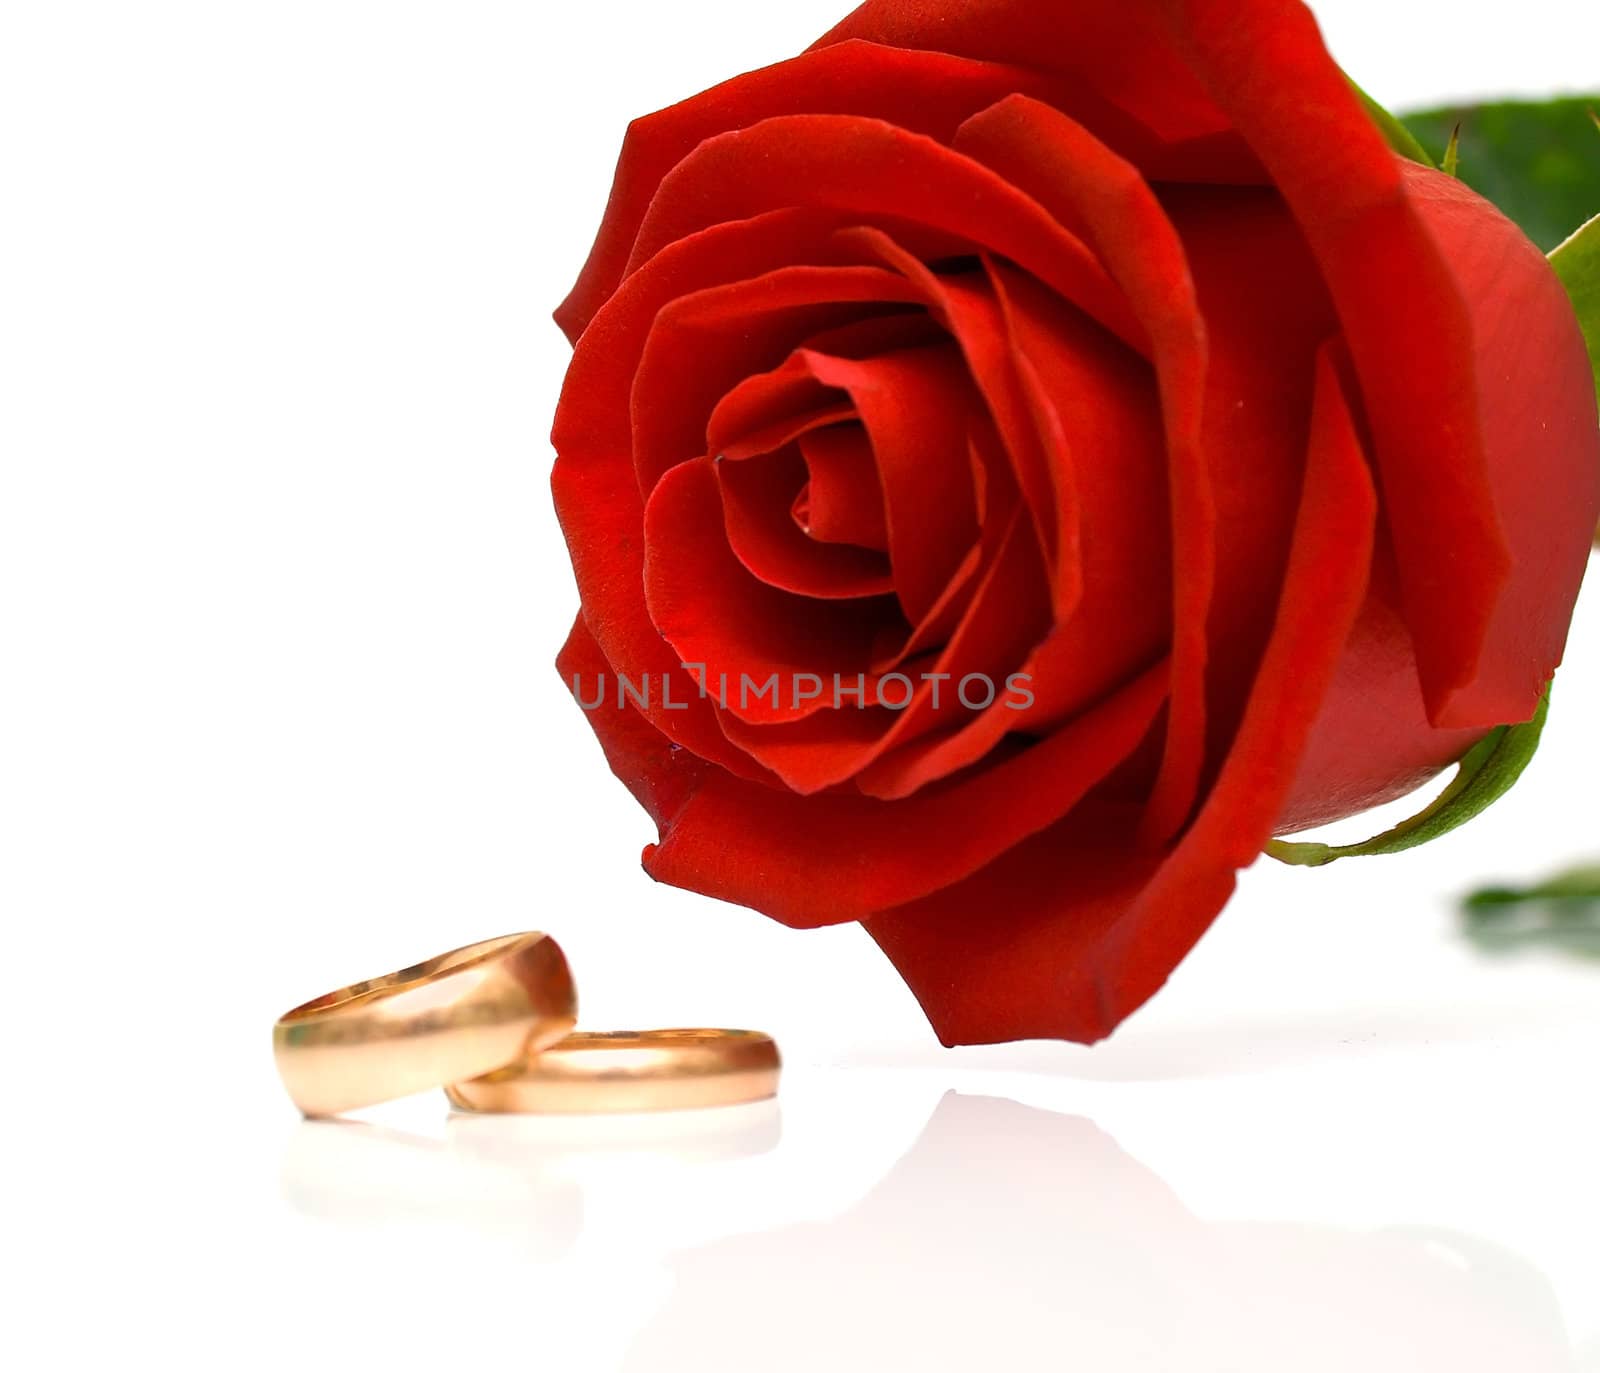 rings and red rose by vikiri